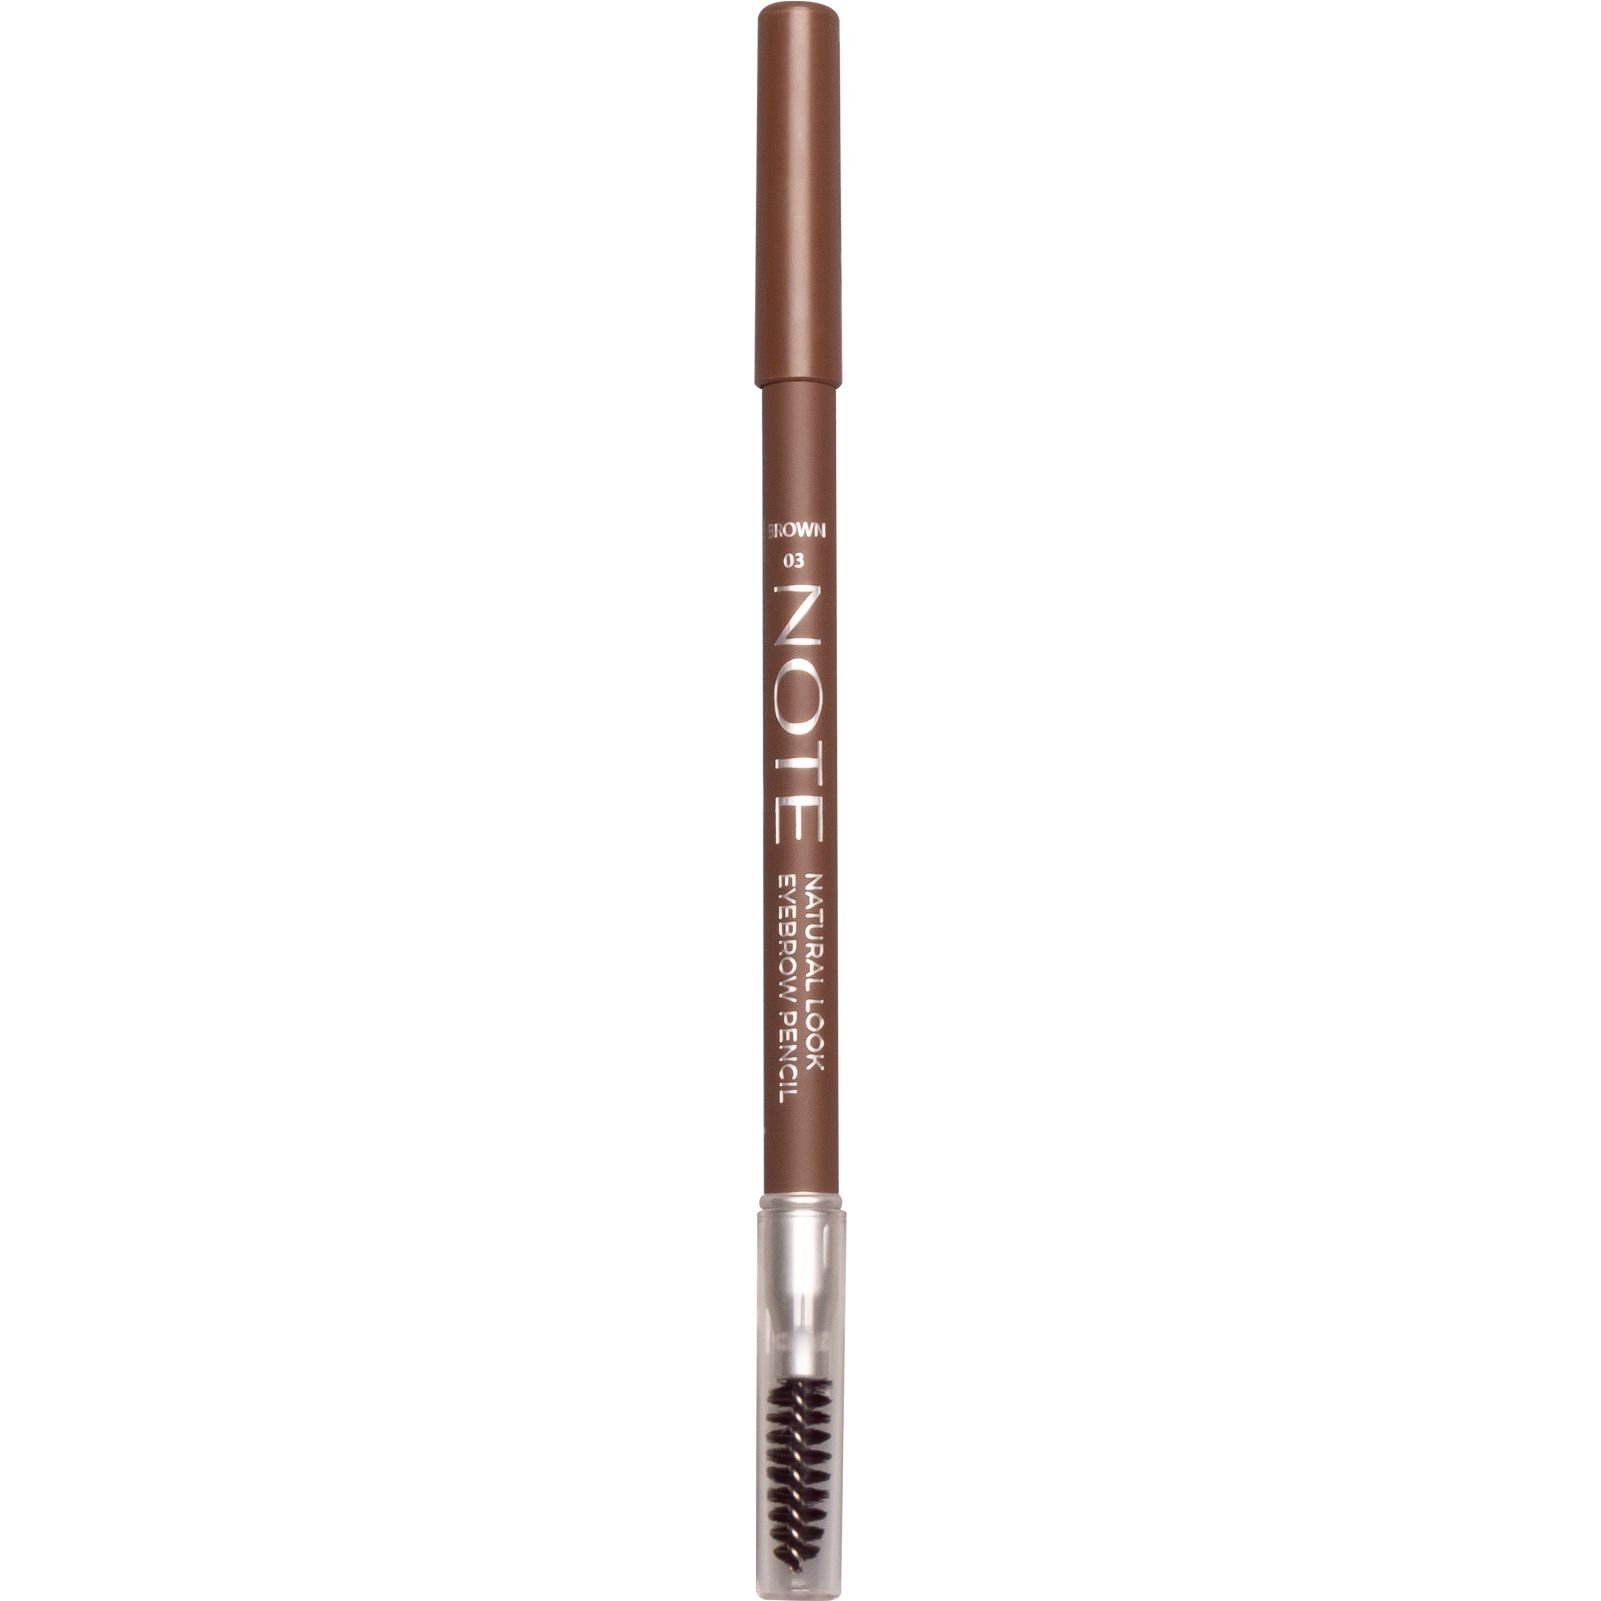 Олівець для брів Note Cosmetique Natural Look Eyebrow Pencil Brown відтінок 3, 1.08 г - фото 1